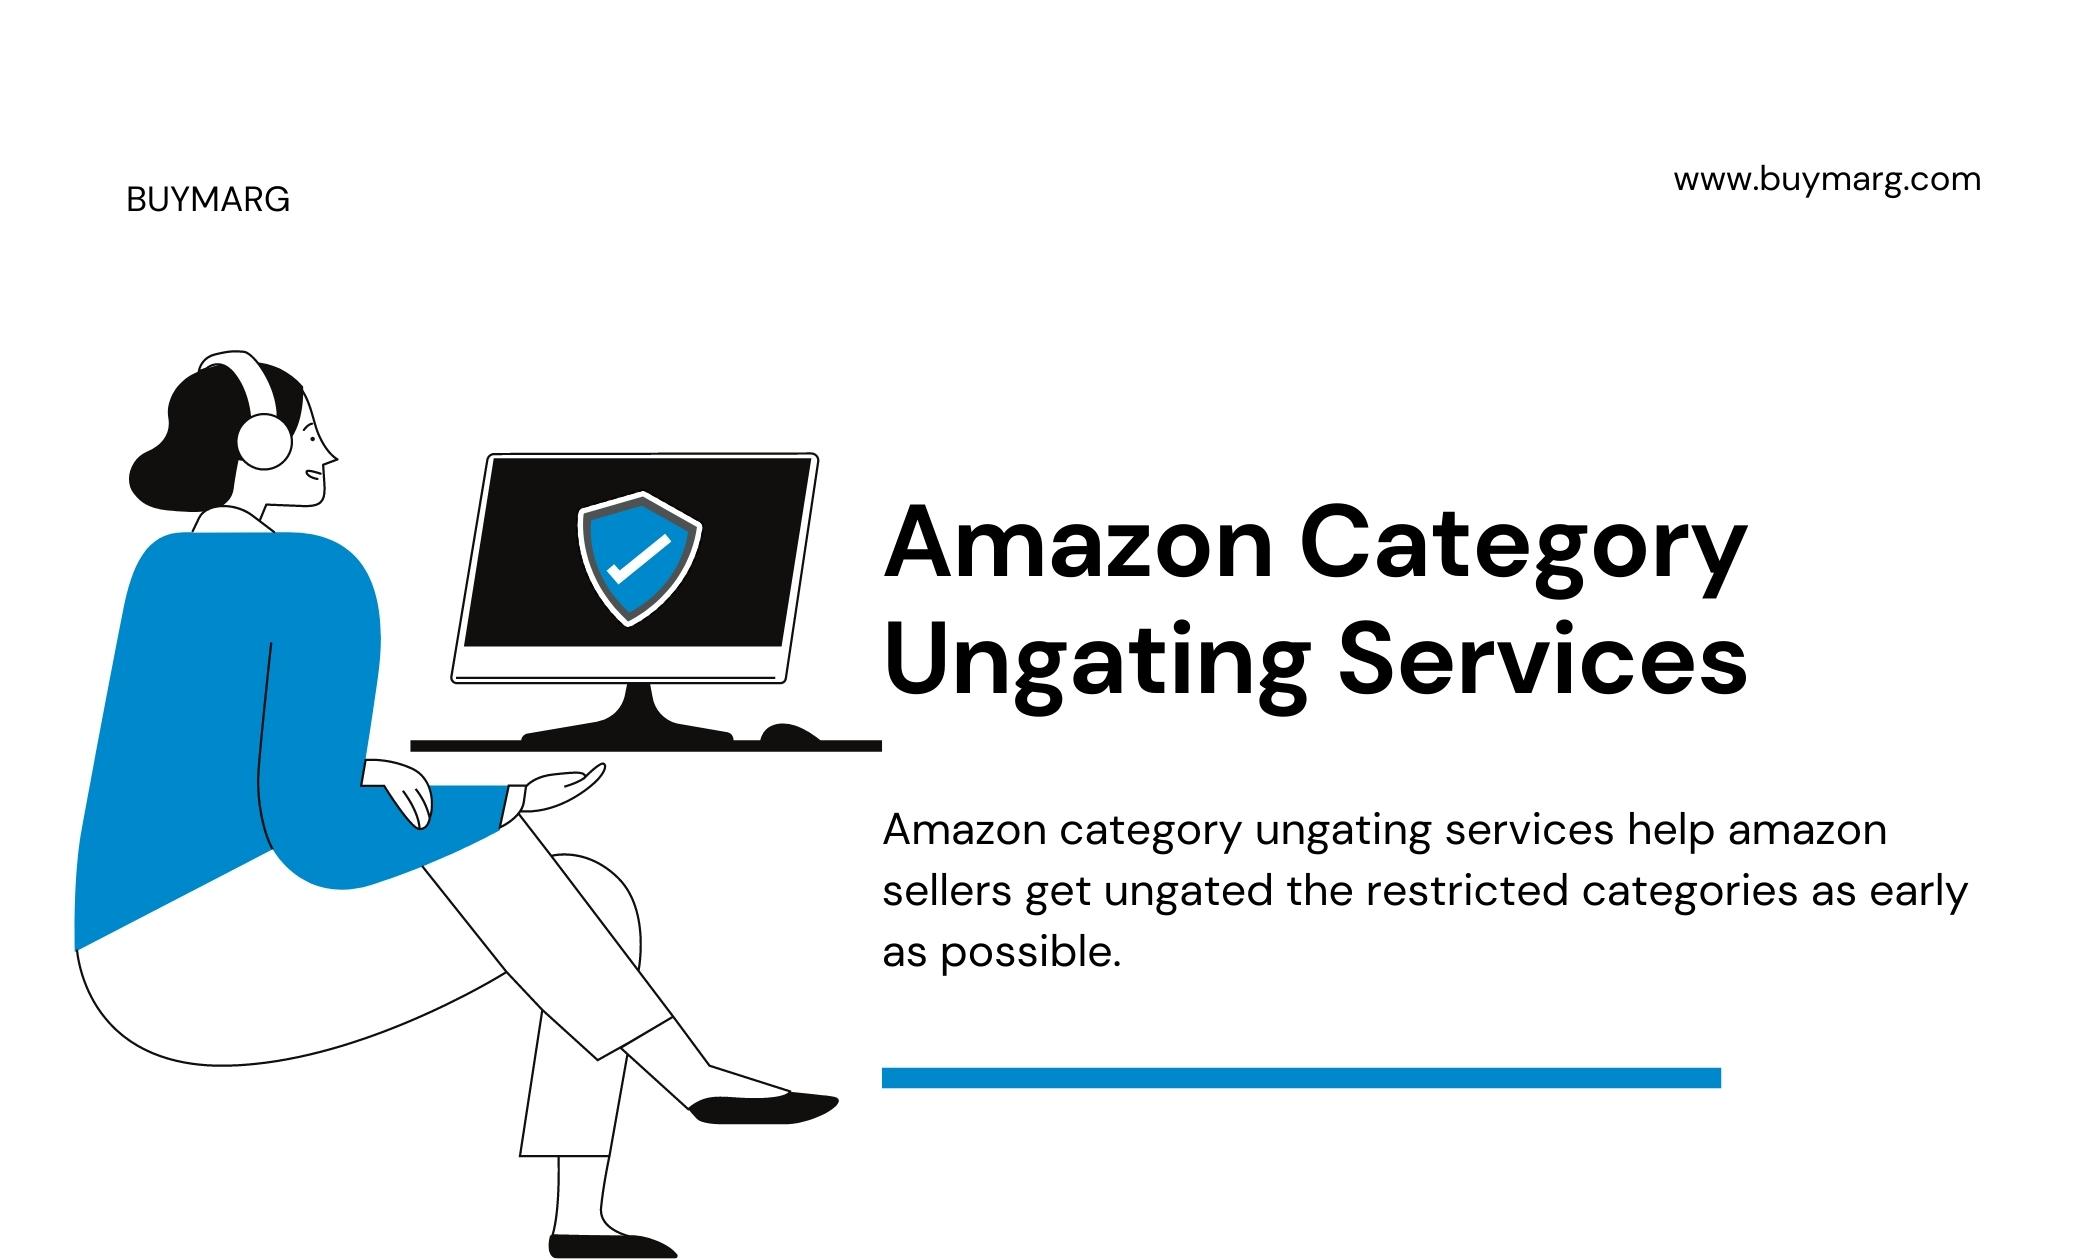 Amazon Category Ungating Services